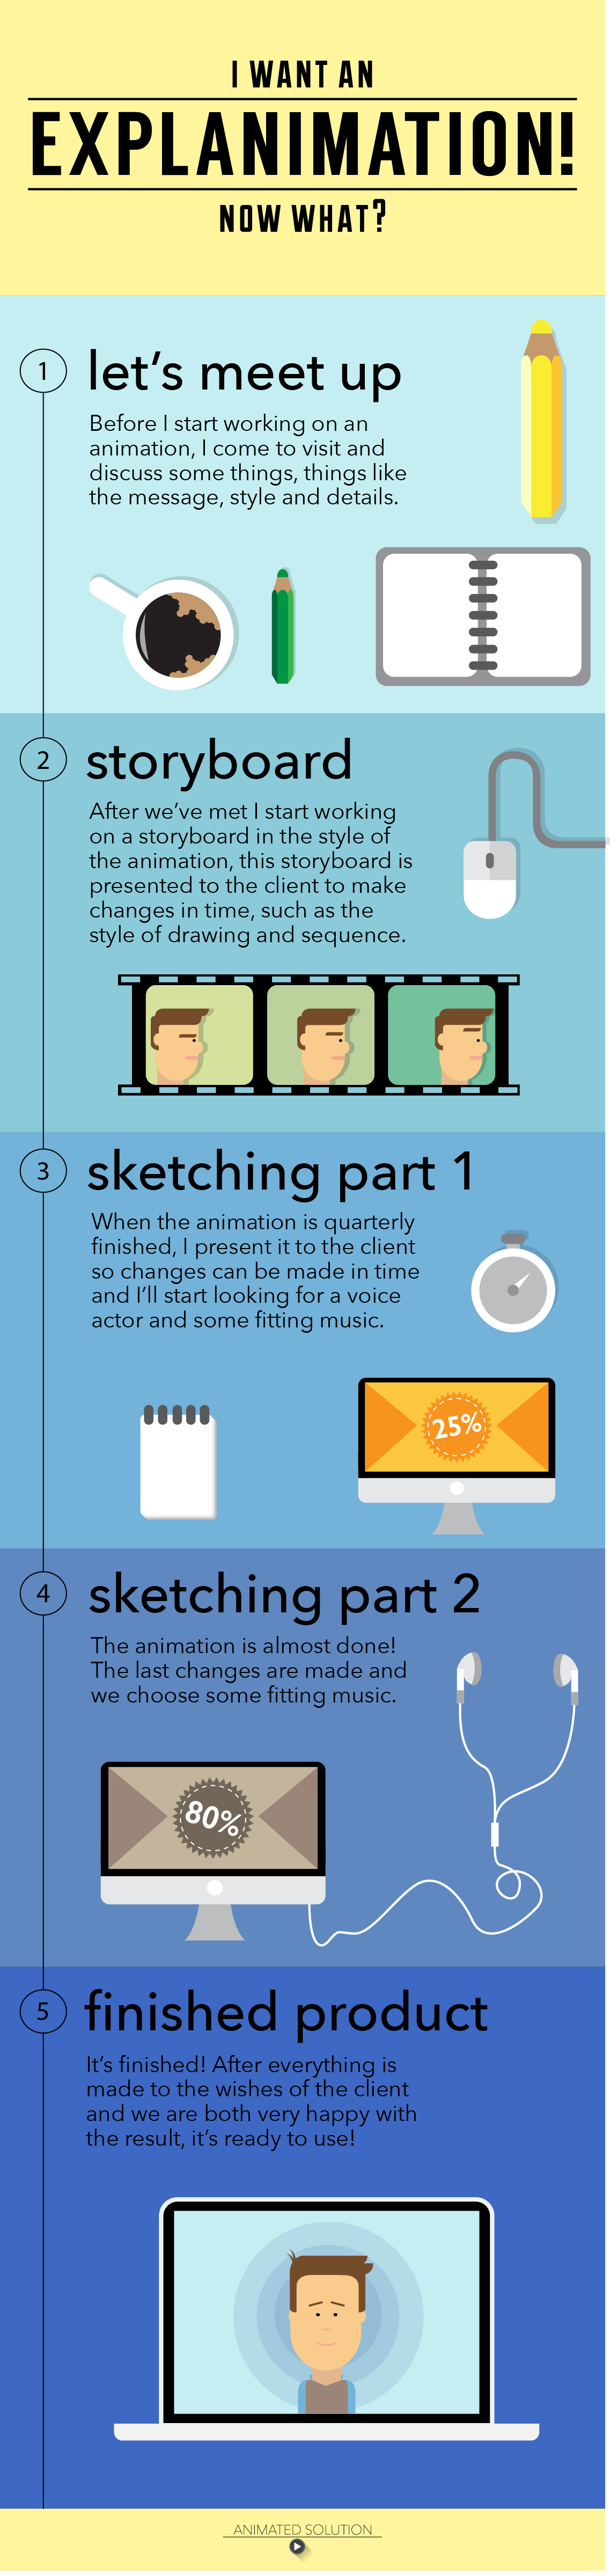 infographic explanimation animated Solution animatedsolution steps step illustrations flat design flat design graphic graphicdesign